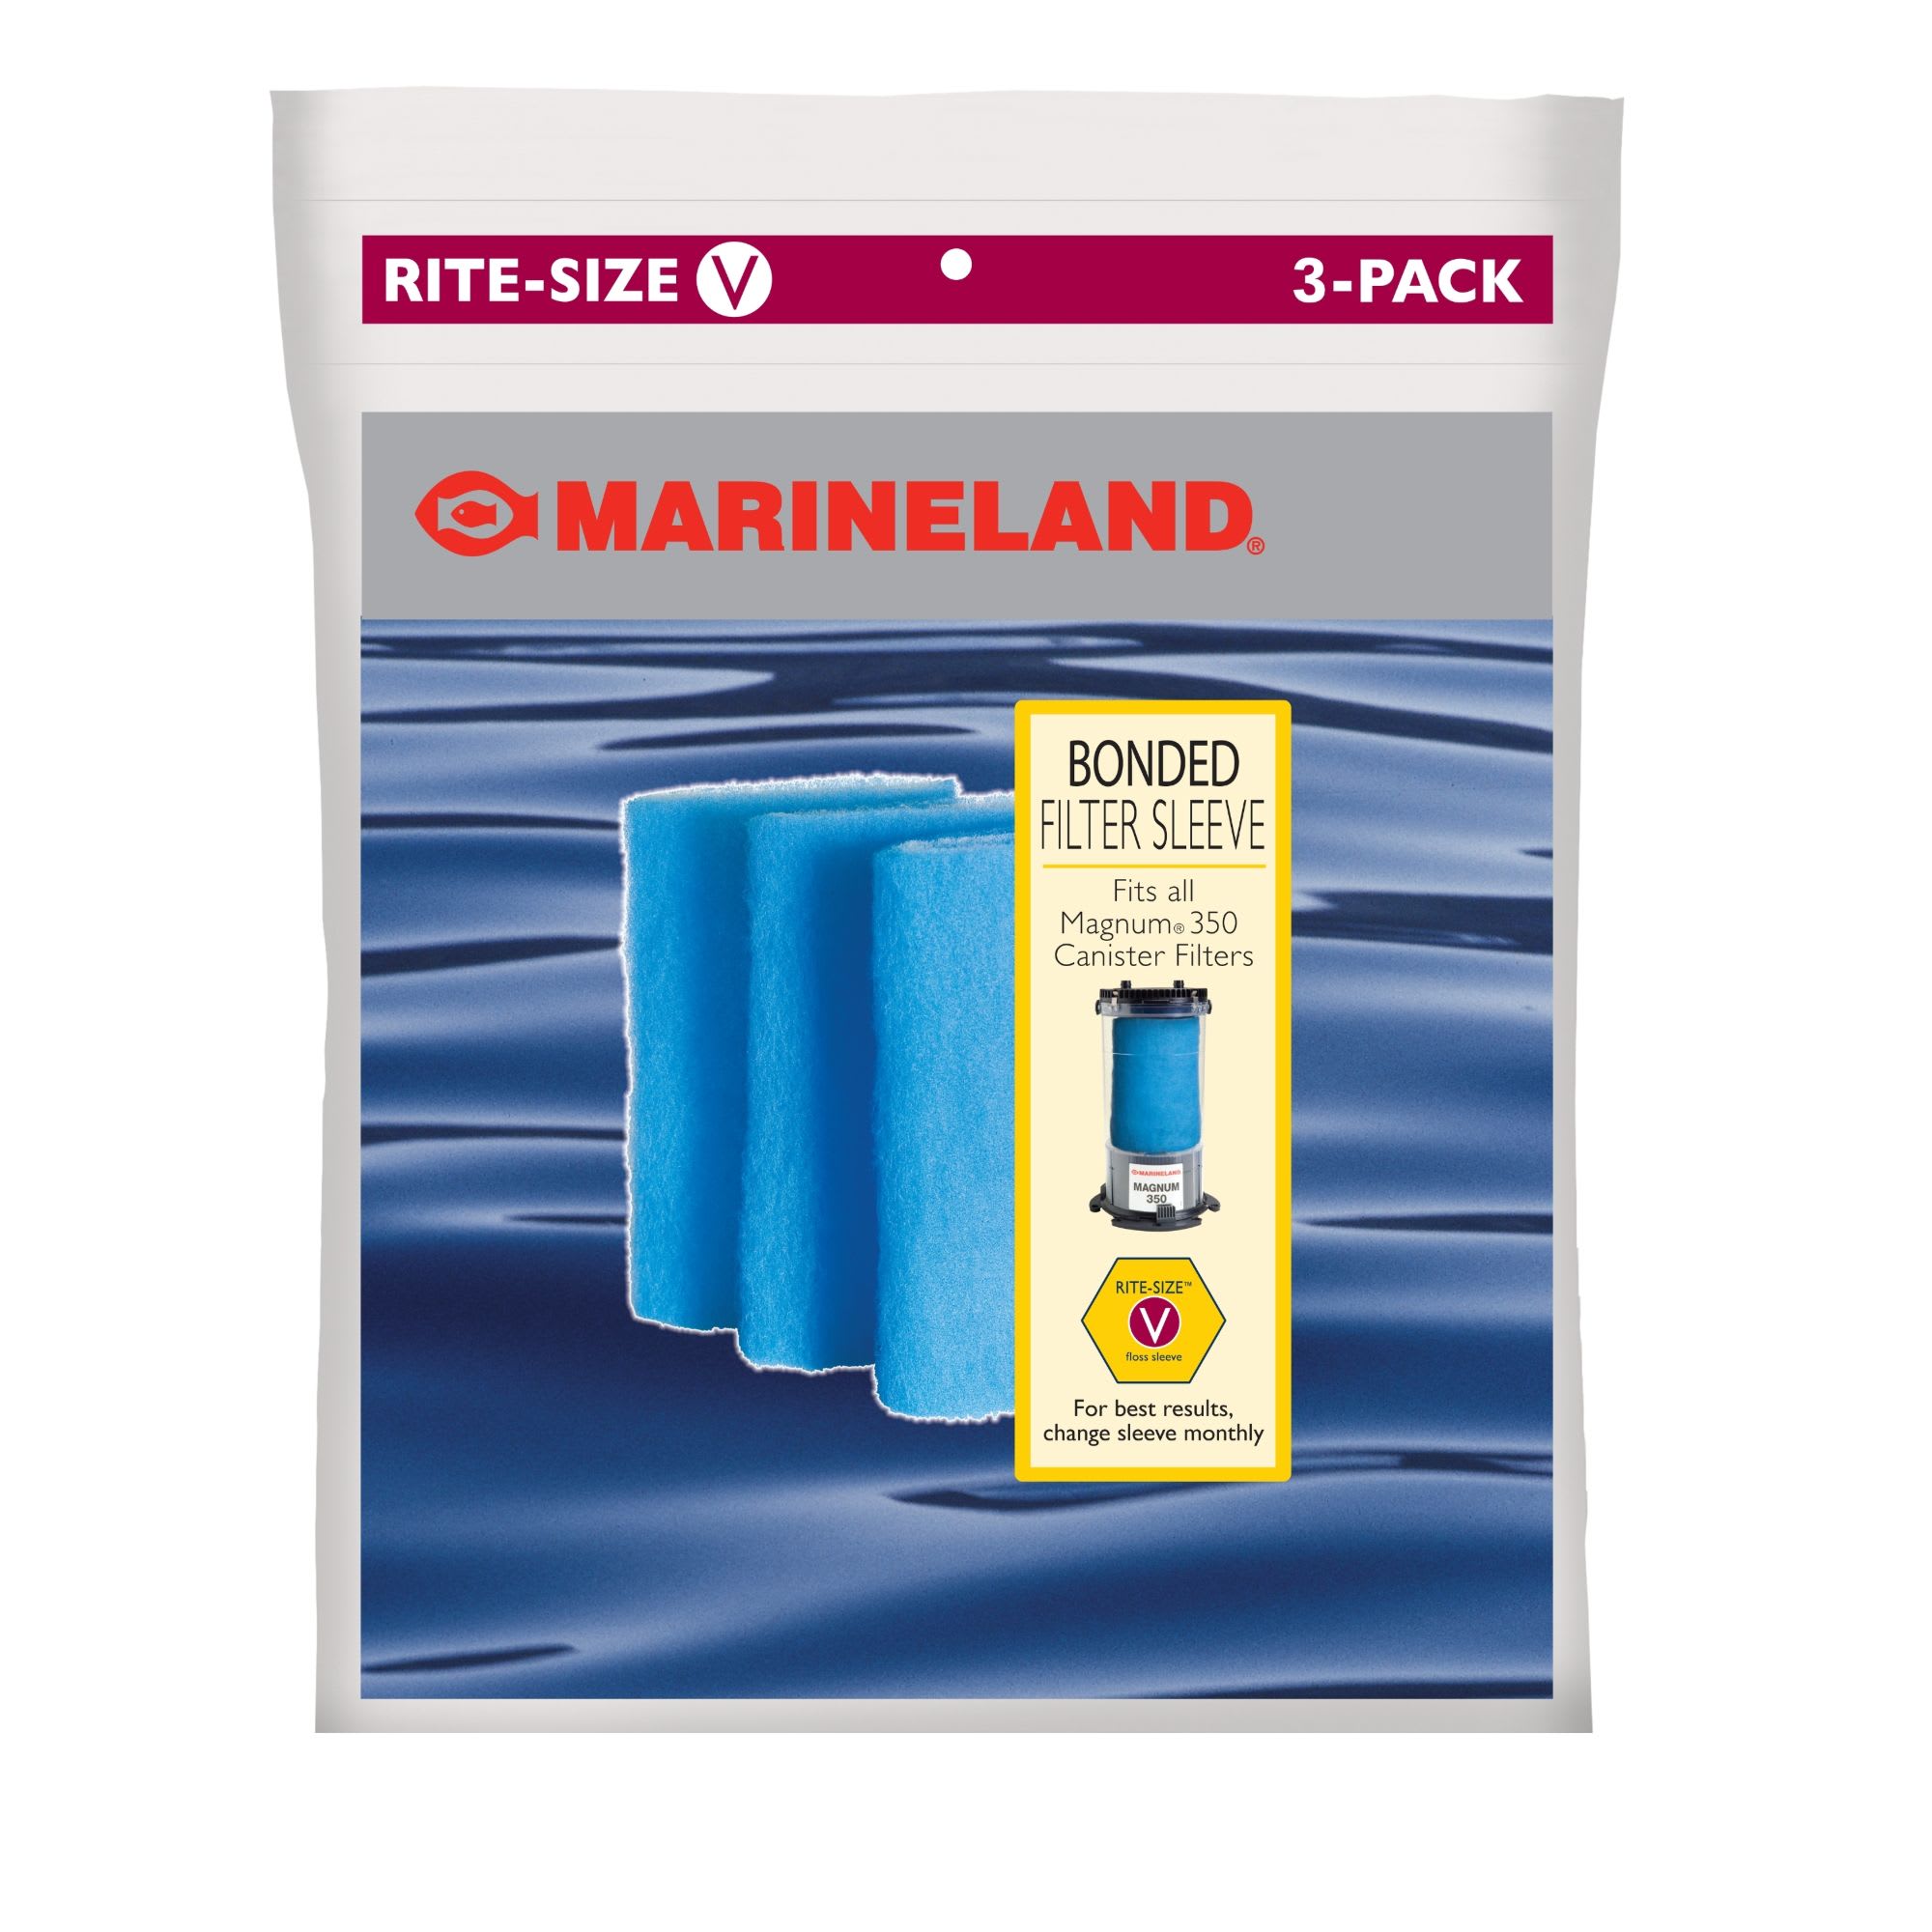 Photos - Aquarium Filter Marineland Rite-Size Bonded Filter Sleeve for Magnum Models 220 